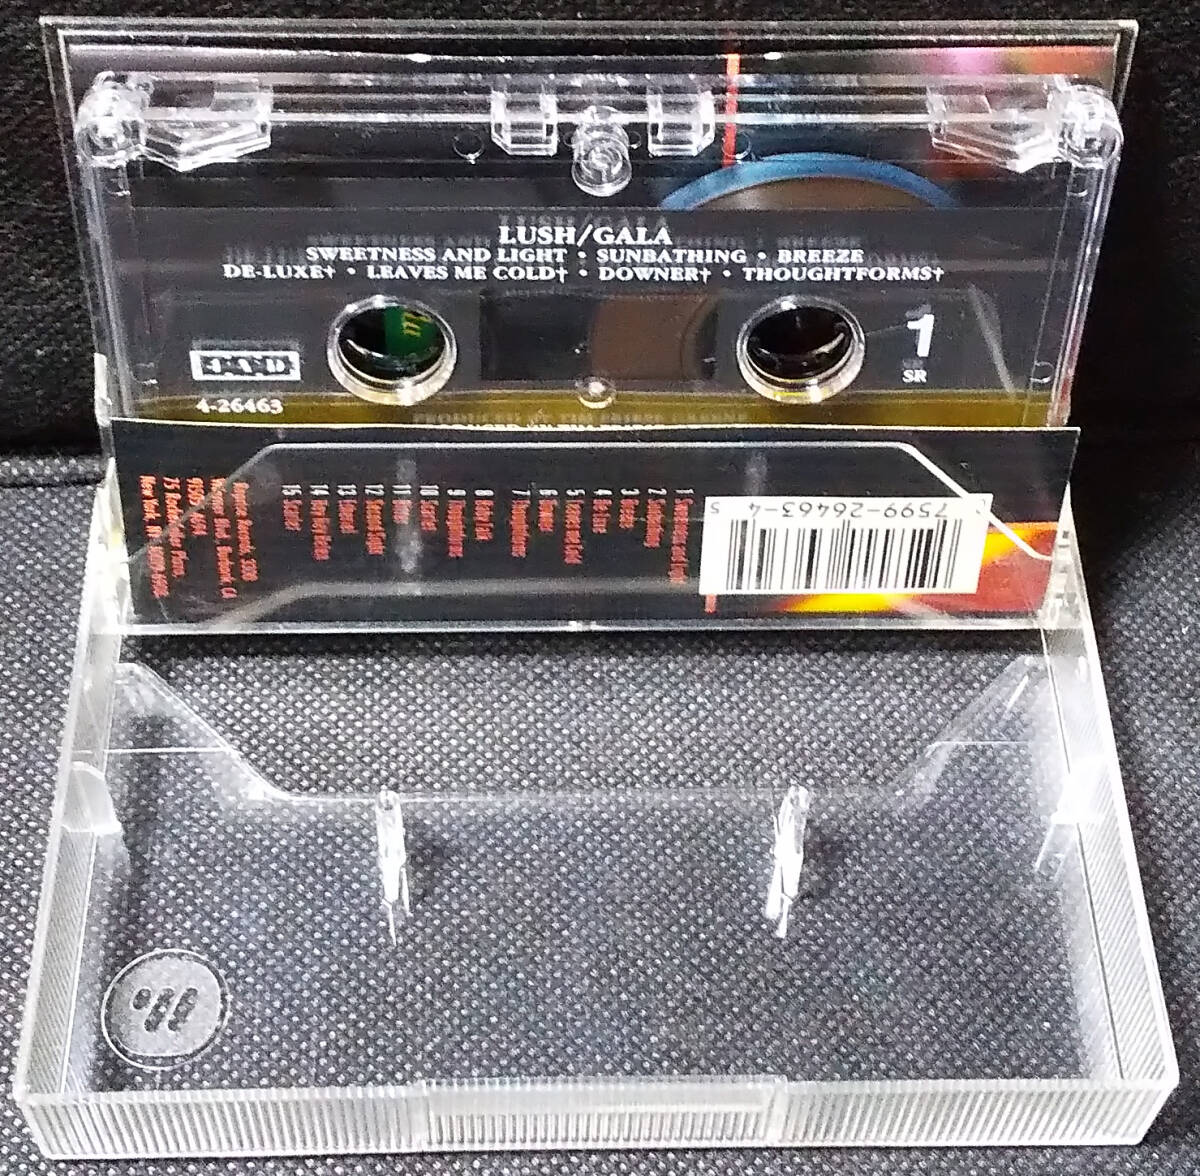 Lush - Gala US盤 Cassette 4AD - 9 26463-4, Reprise Records - 4-26463 1990年 Cocteau Twins, This Mortal Coil, Dead Can Dance_画像3